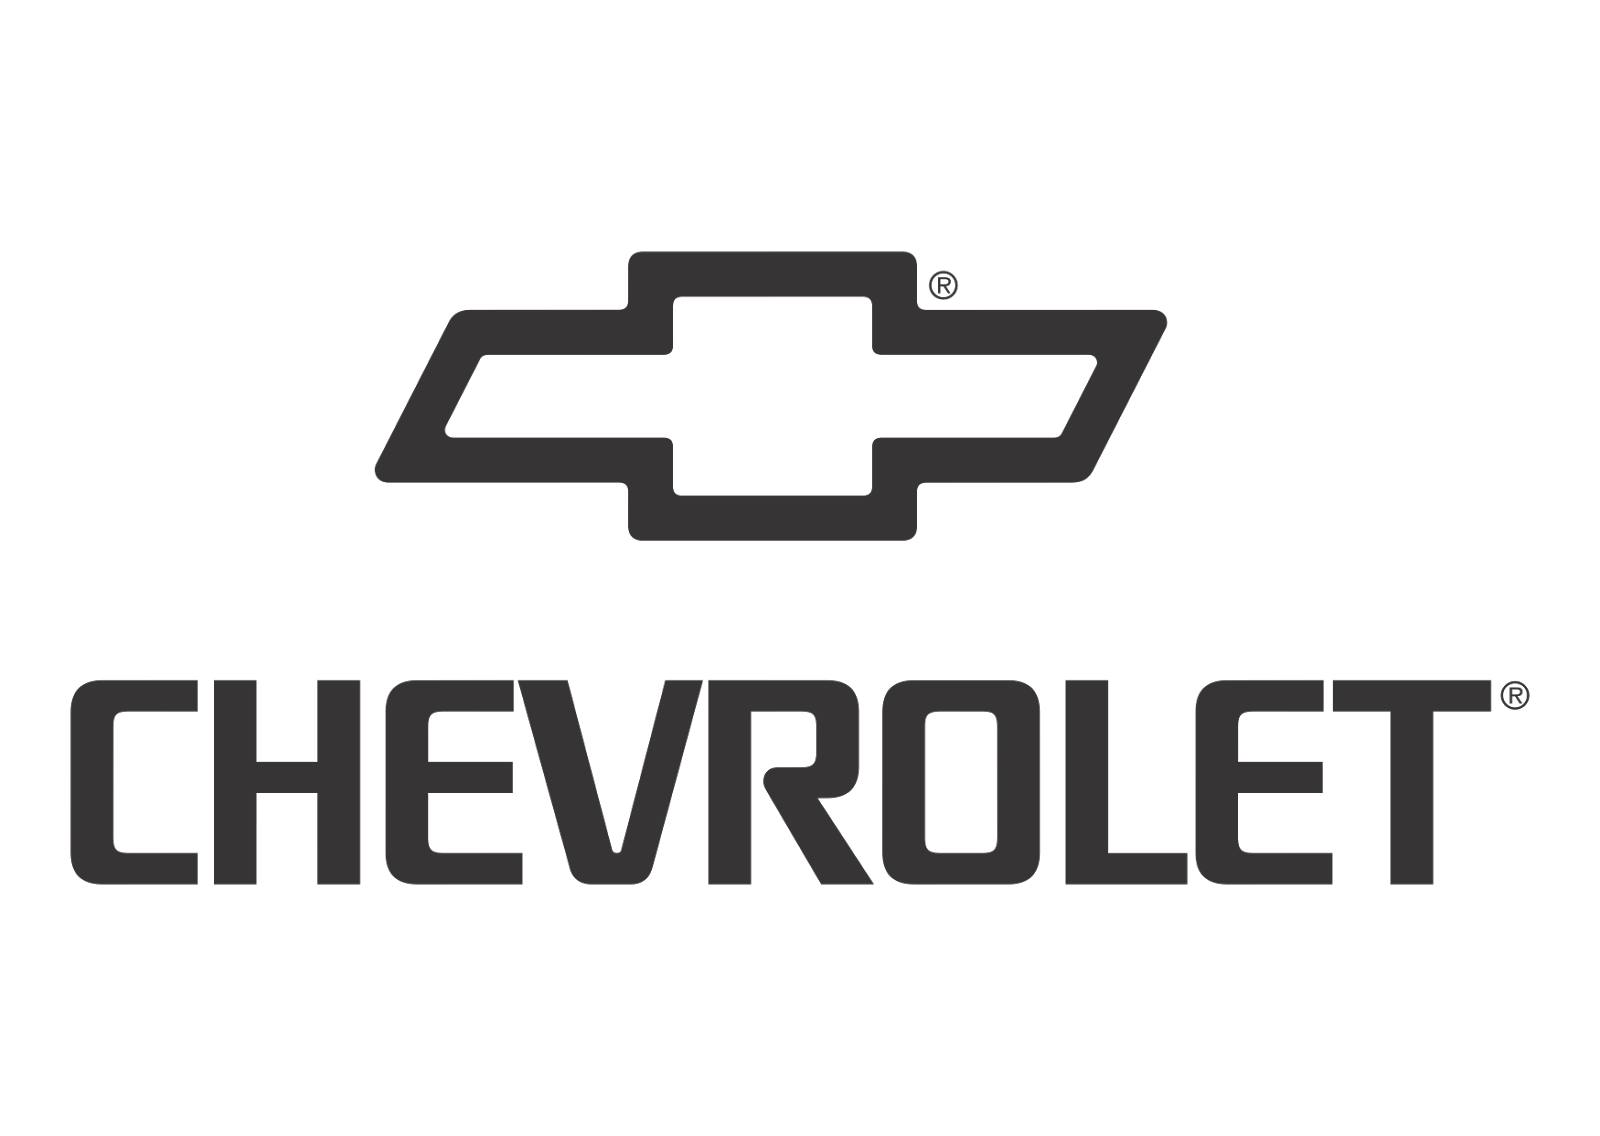 Free Black and White Vector Chevrolet Logo